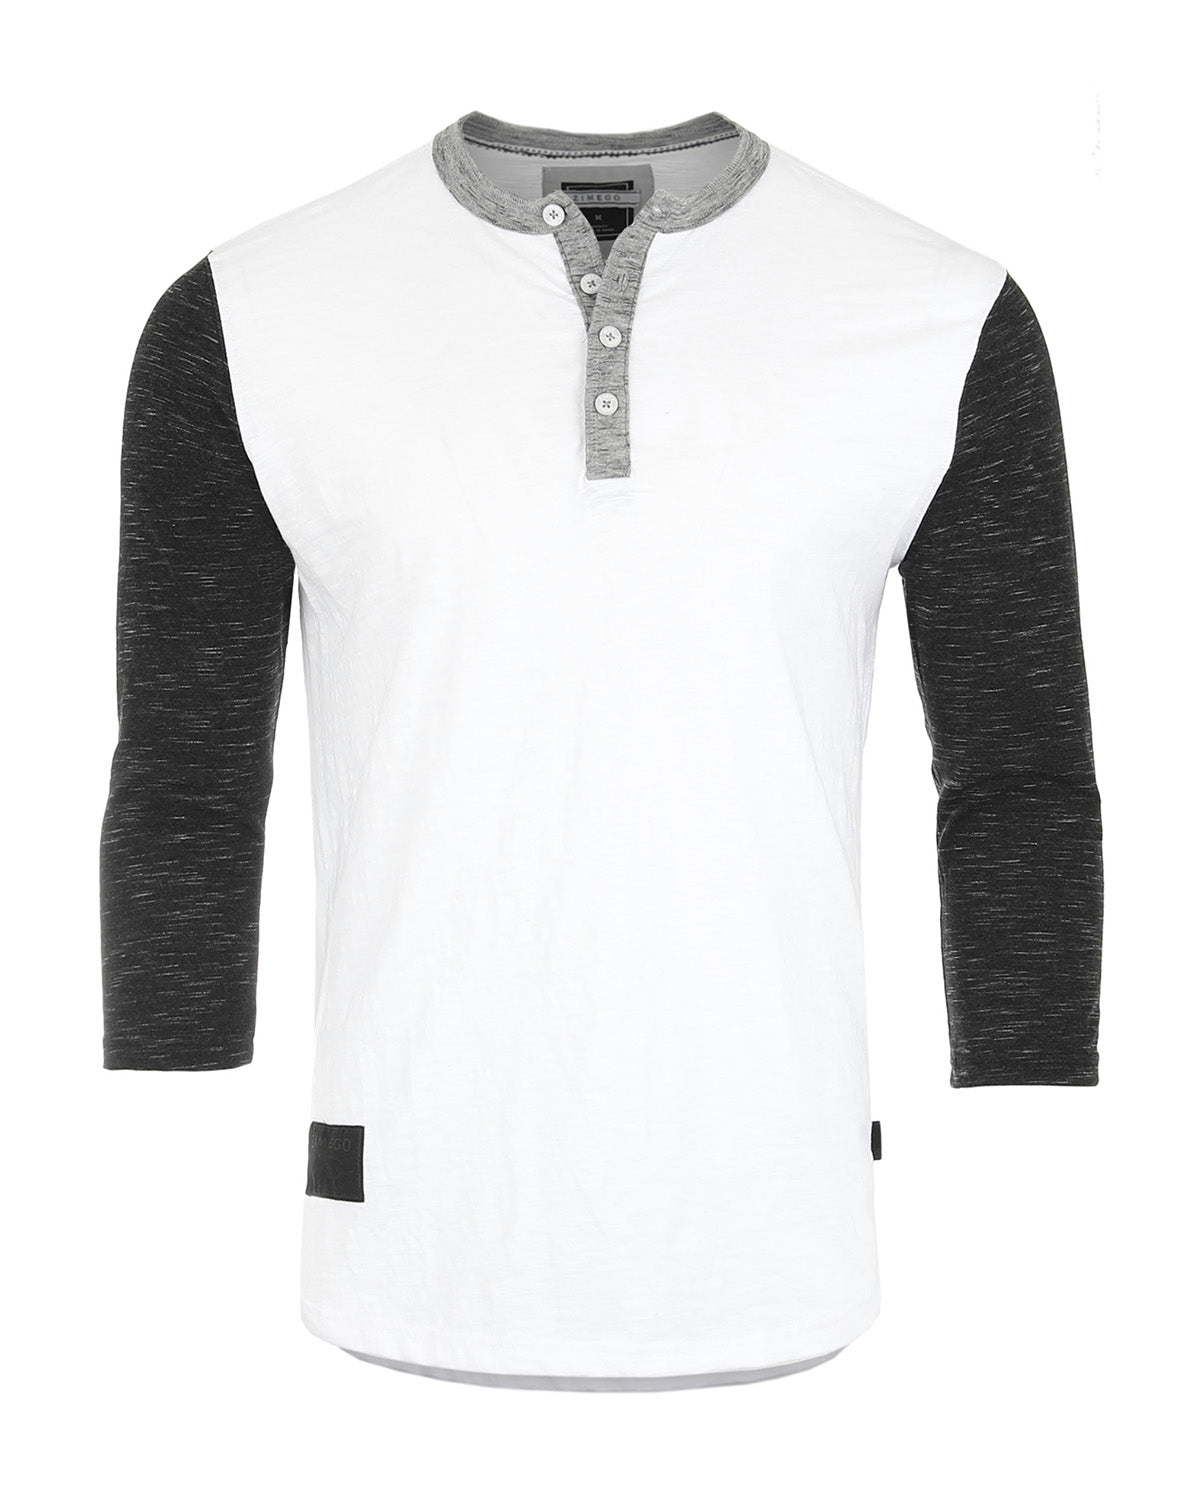 Men's 3/4 Sleeve Black & White Baseball Henley – Casual Athletic Button Crewneck Shirts